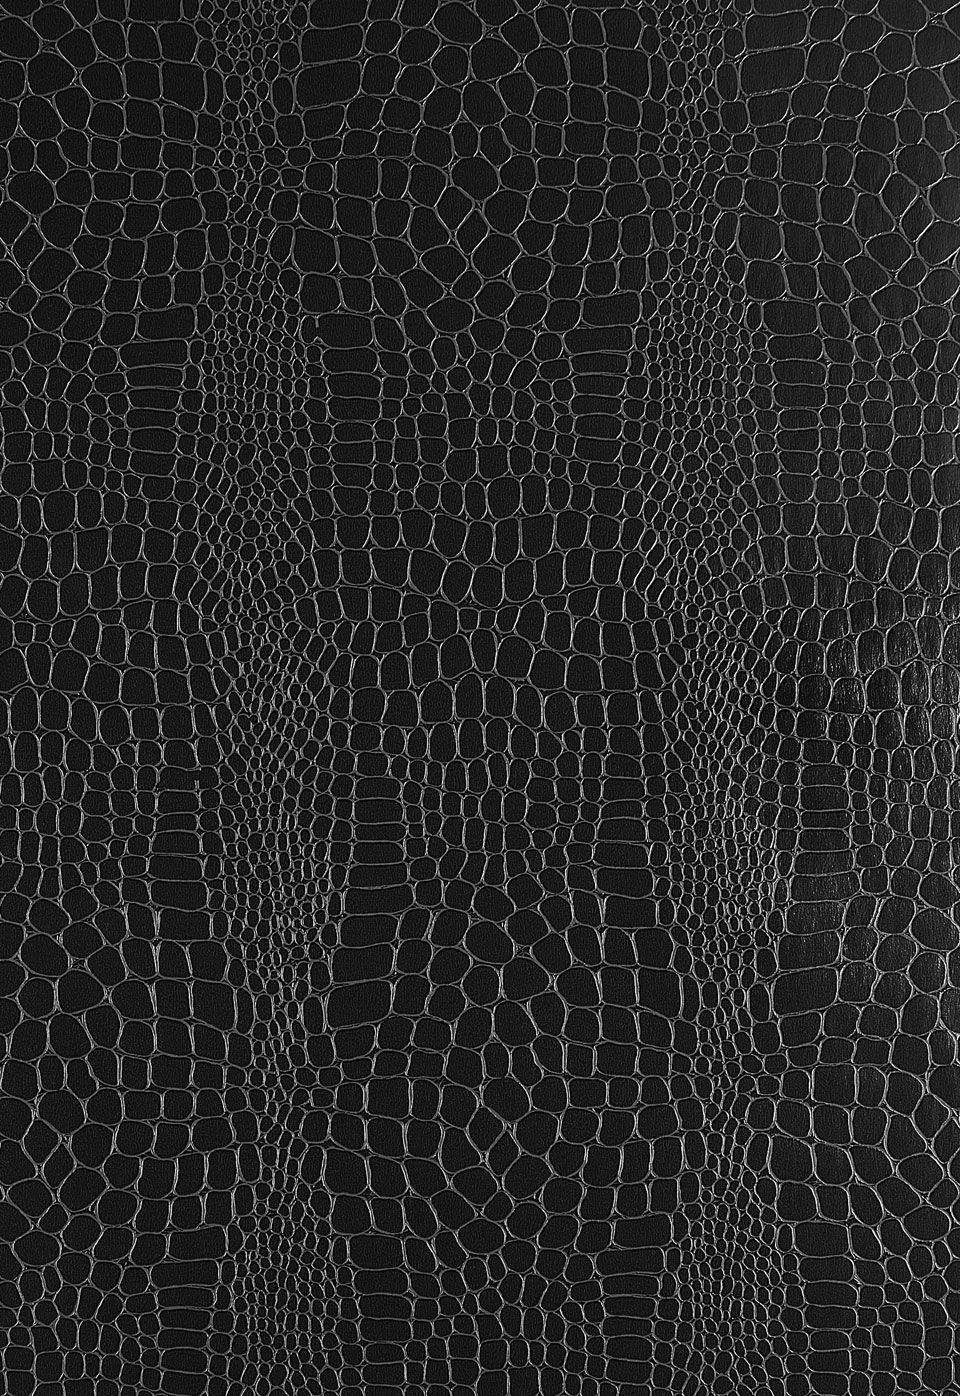 Crocodile Skin Wallpaper Free Crocodile Skin Background